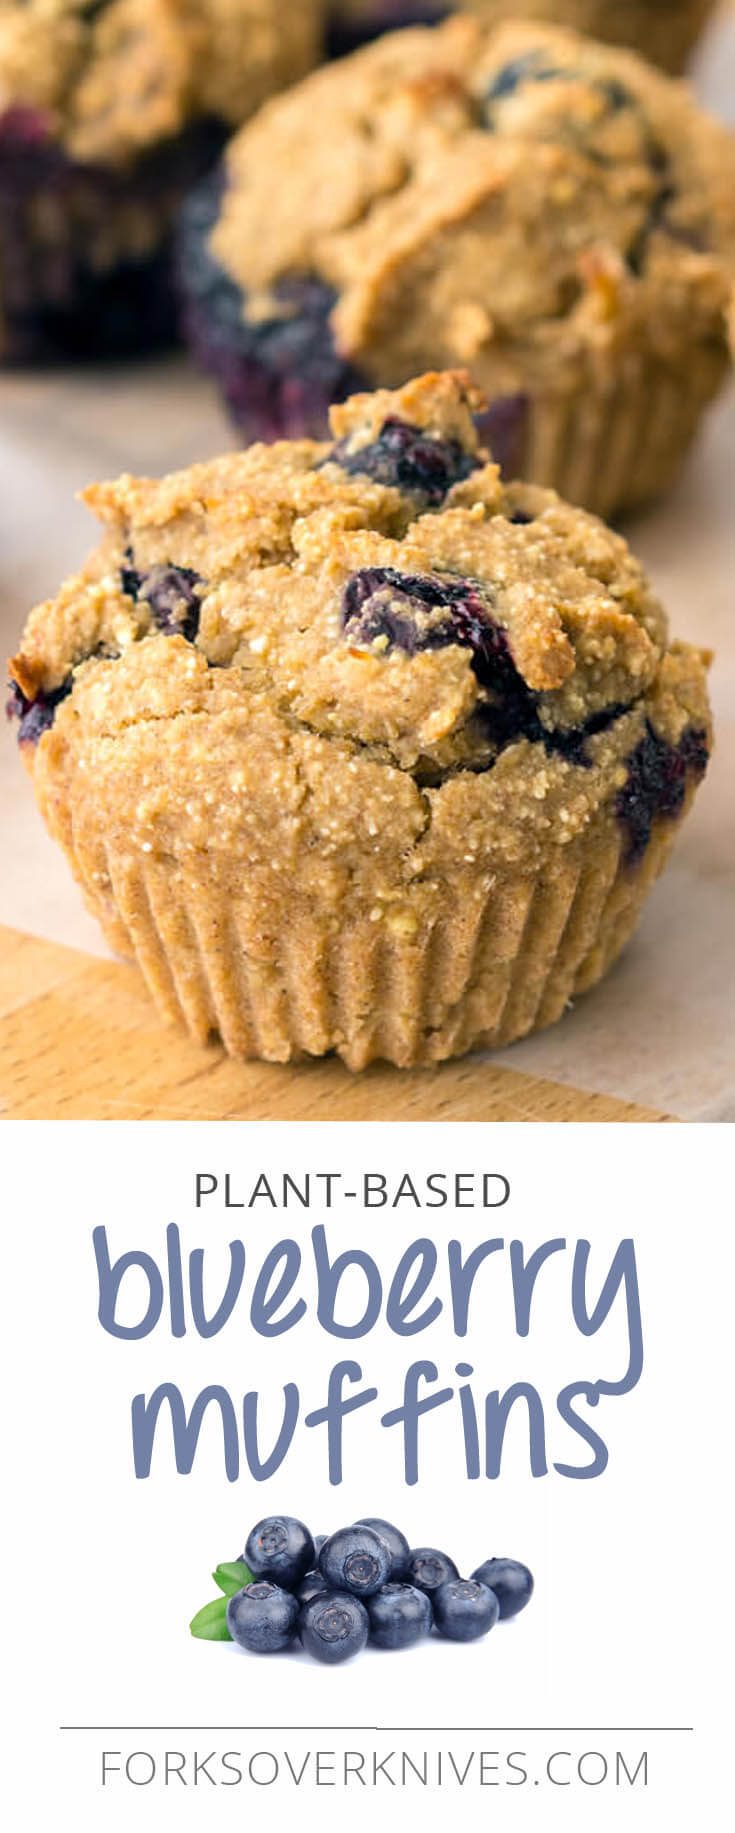 Blueberry Muffins - Plant-Based Vegan Recipe